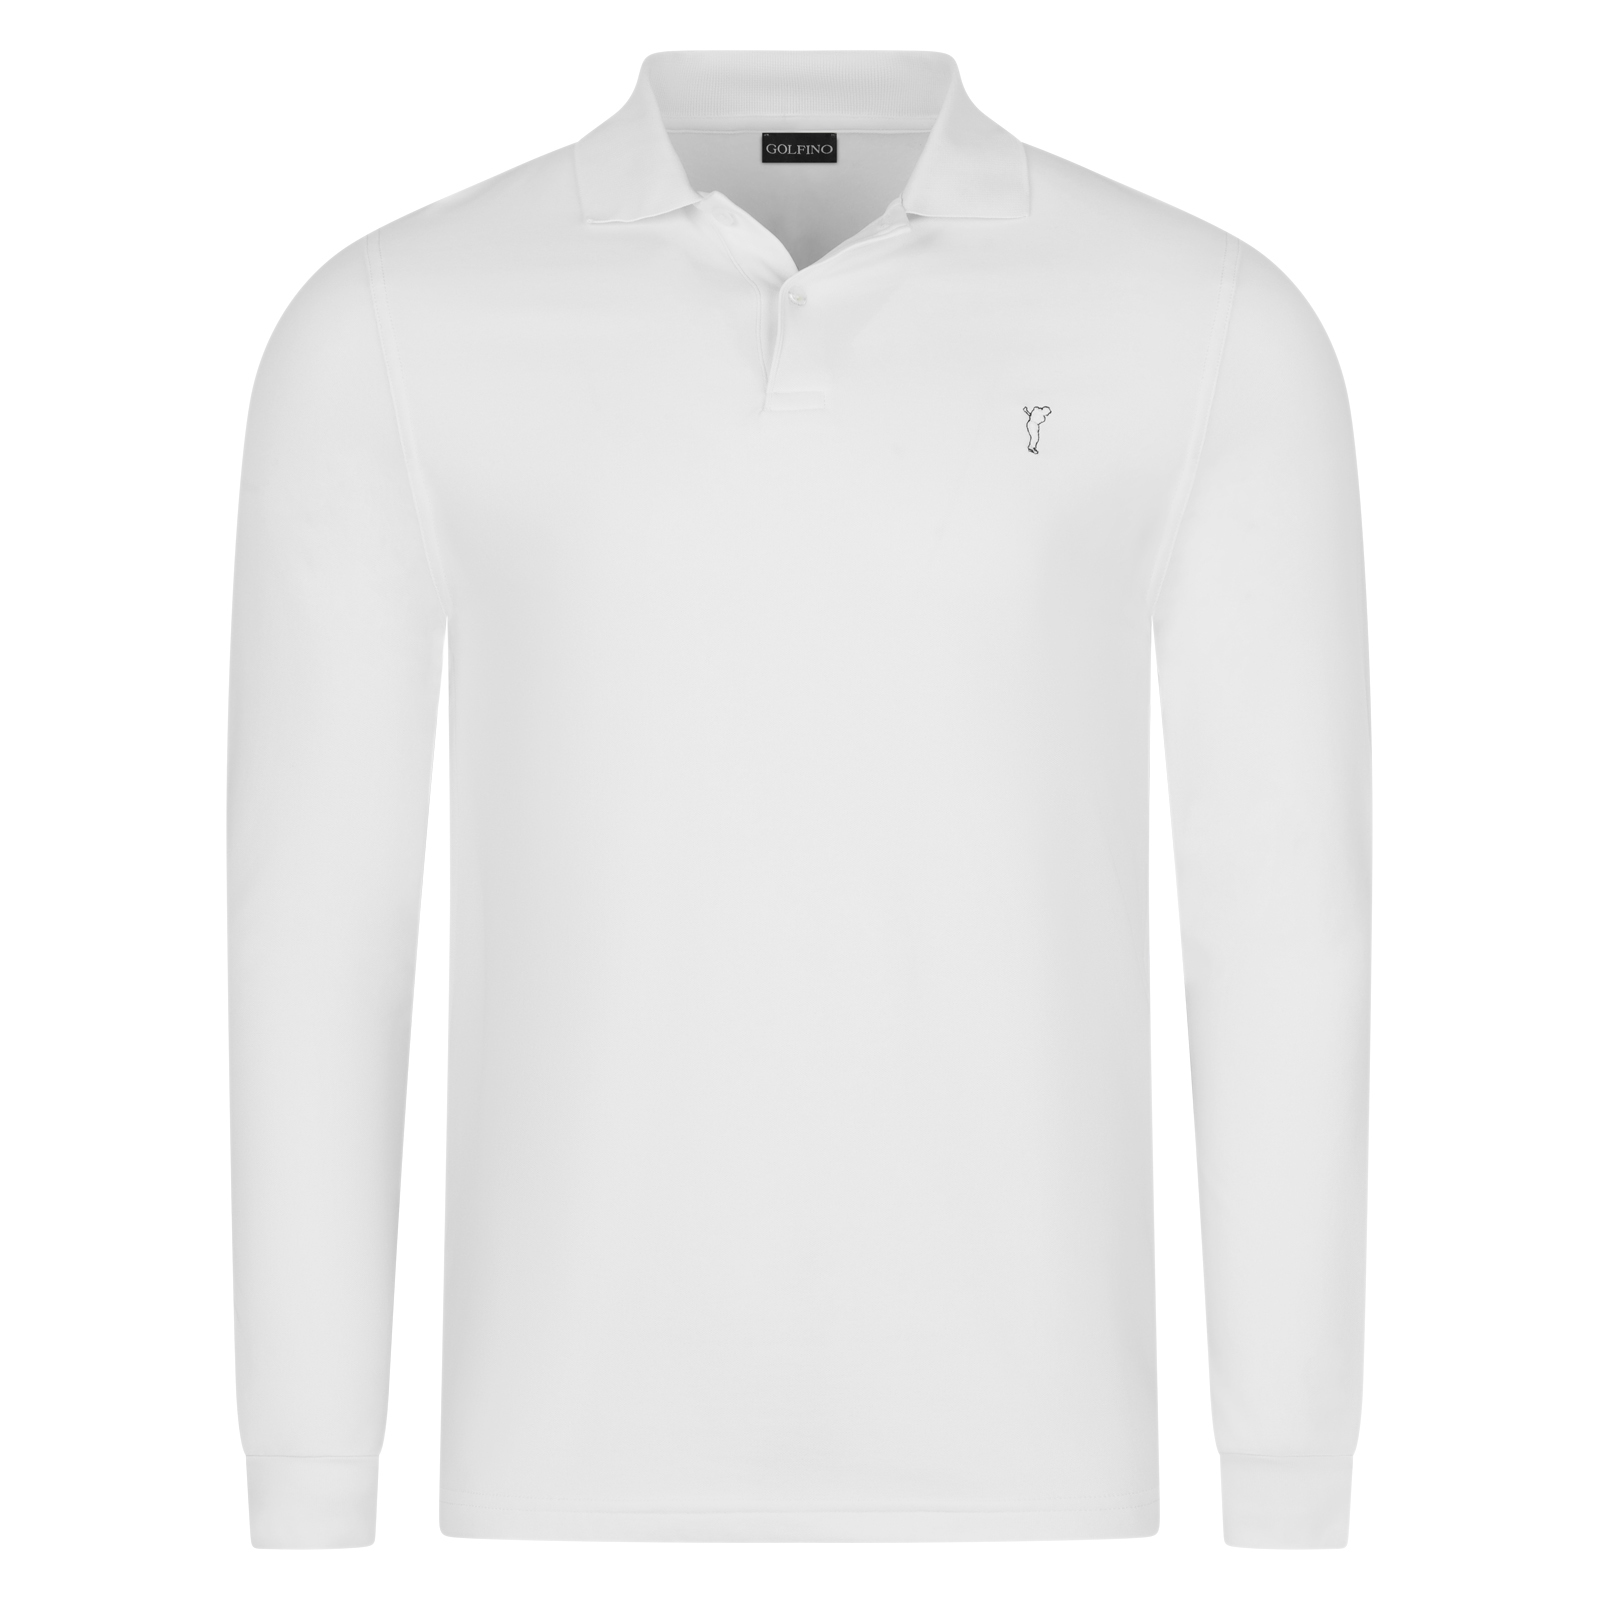 Men's classical long-sleeved golf polo shirt